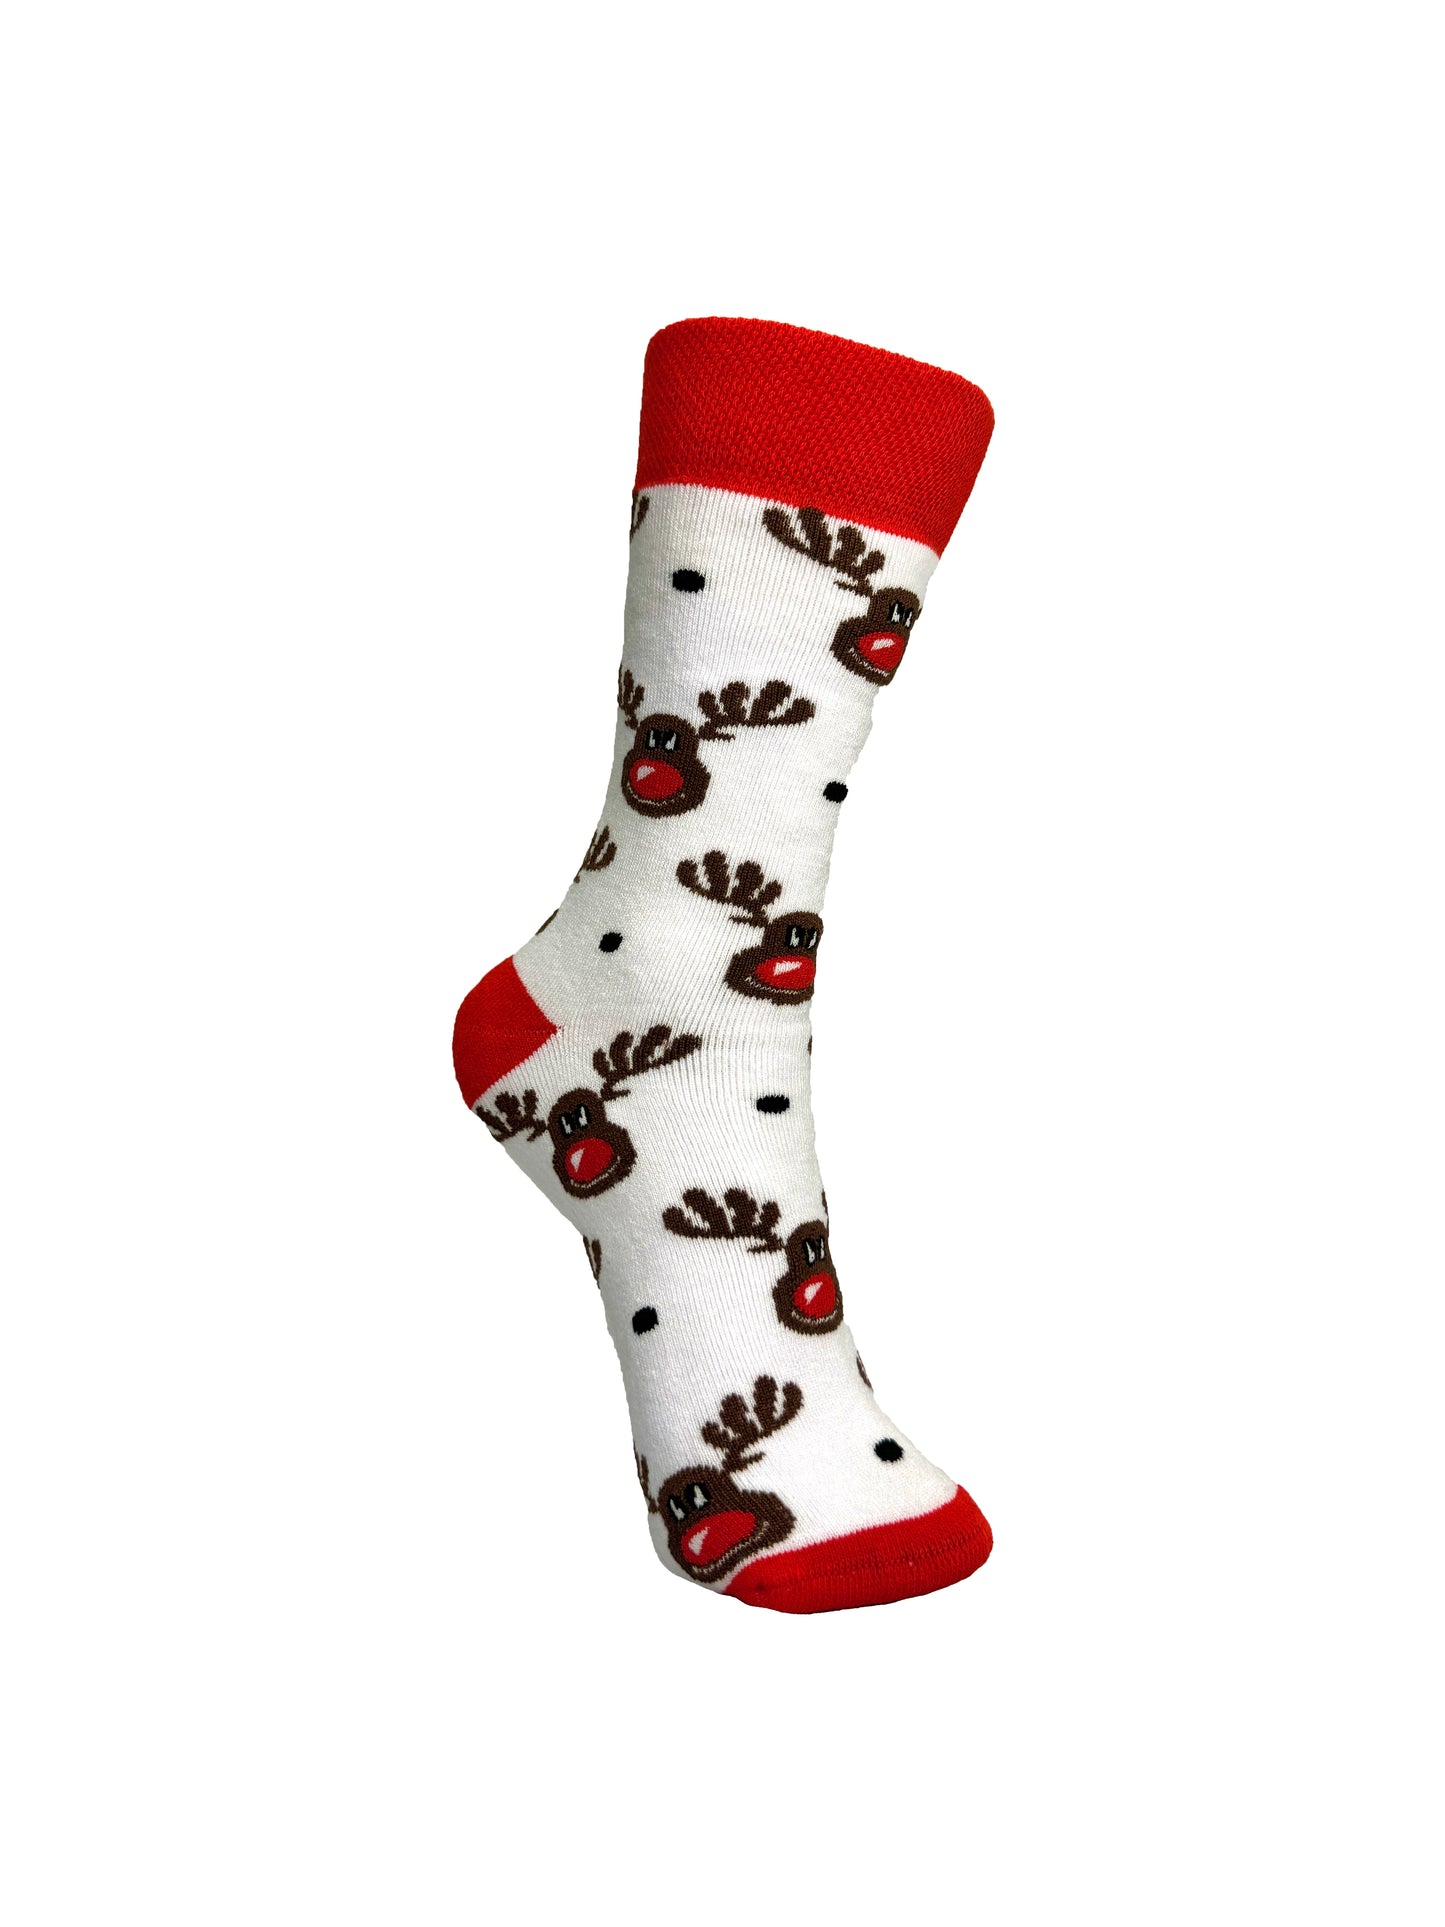 Red Nosed Christmas Socks